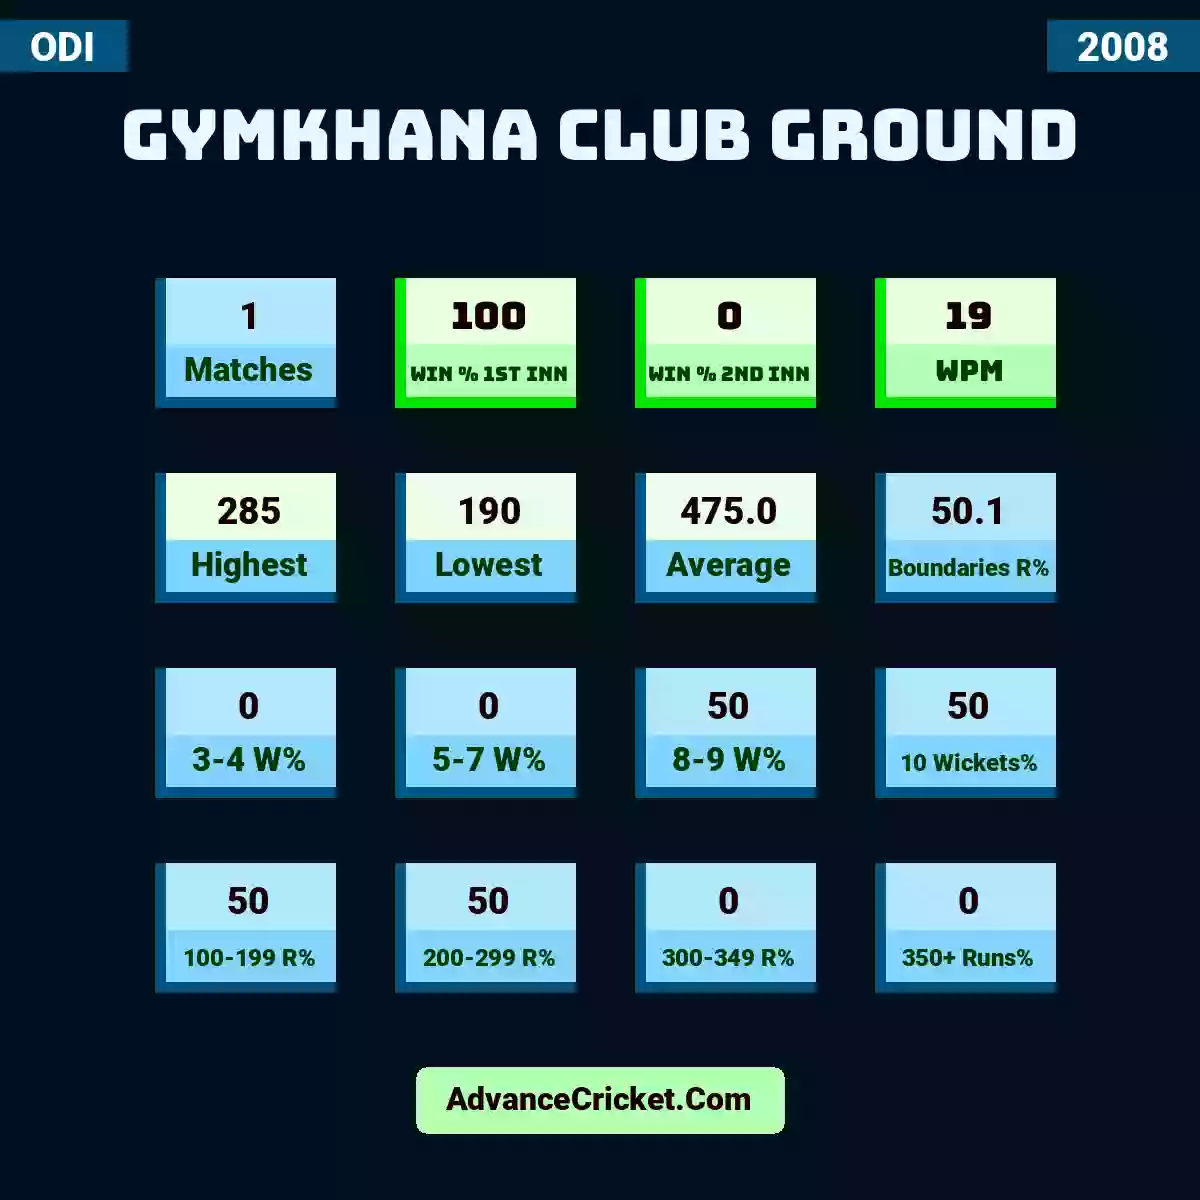 Image showing Gymkhana Club Ground with Matches: 1, Win % 1st Inn: 100, Win % 2nd Inn: 0, WPM: 19, Highest: 285, Lowest: 190, Average: 475.0, Boundaries R%: 50.1, 3-4 W%: 0, 5-7 W%: 0, 8-9 W%: 50, 10 Wickets%: 50, 100-199 R%: 50, 200-299 R%: 50, 300-349 R%: 0, 350+ Runs%: 0.